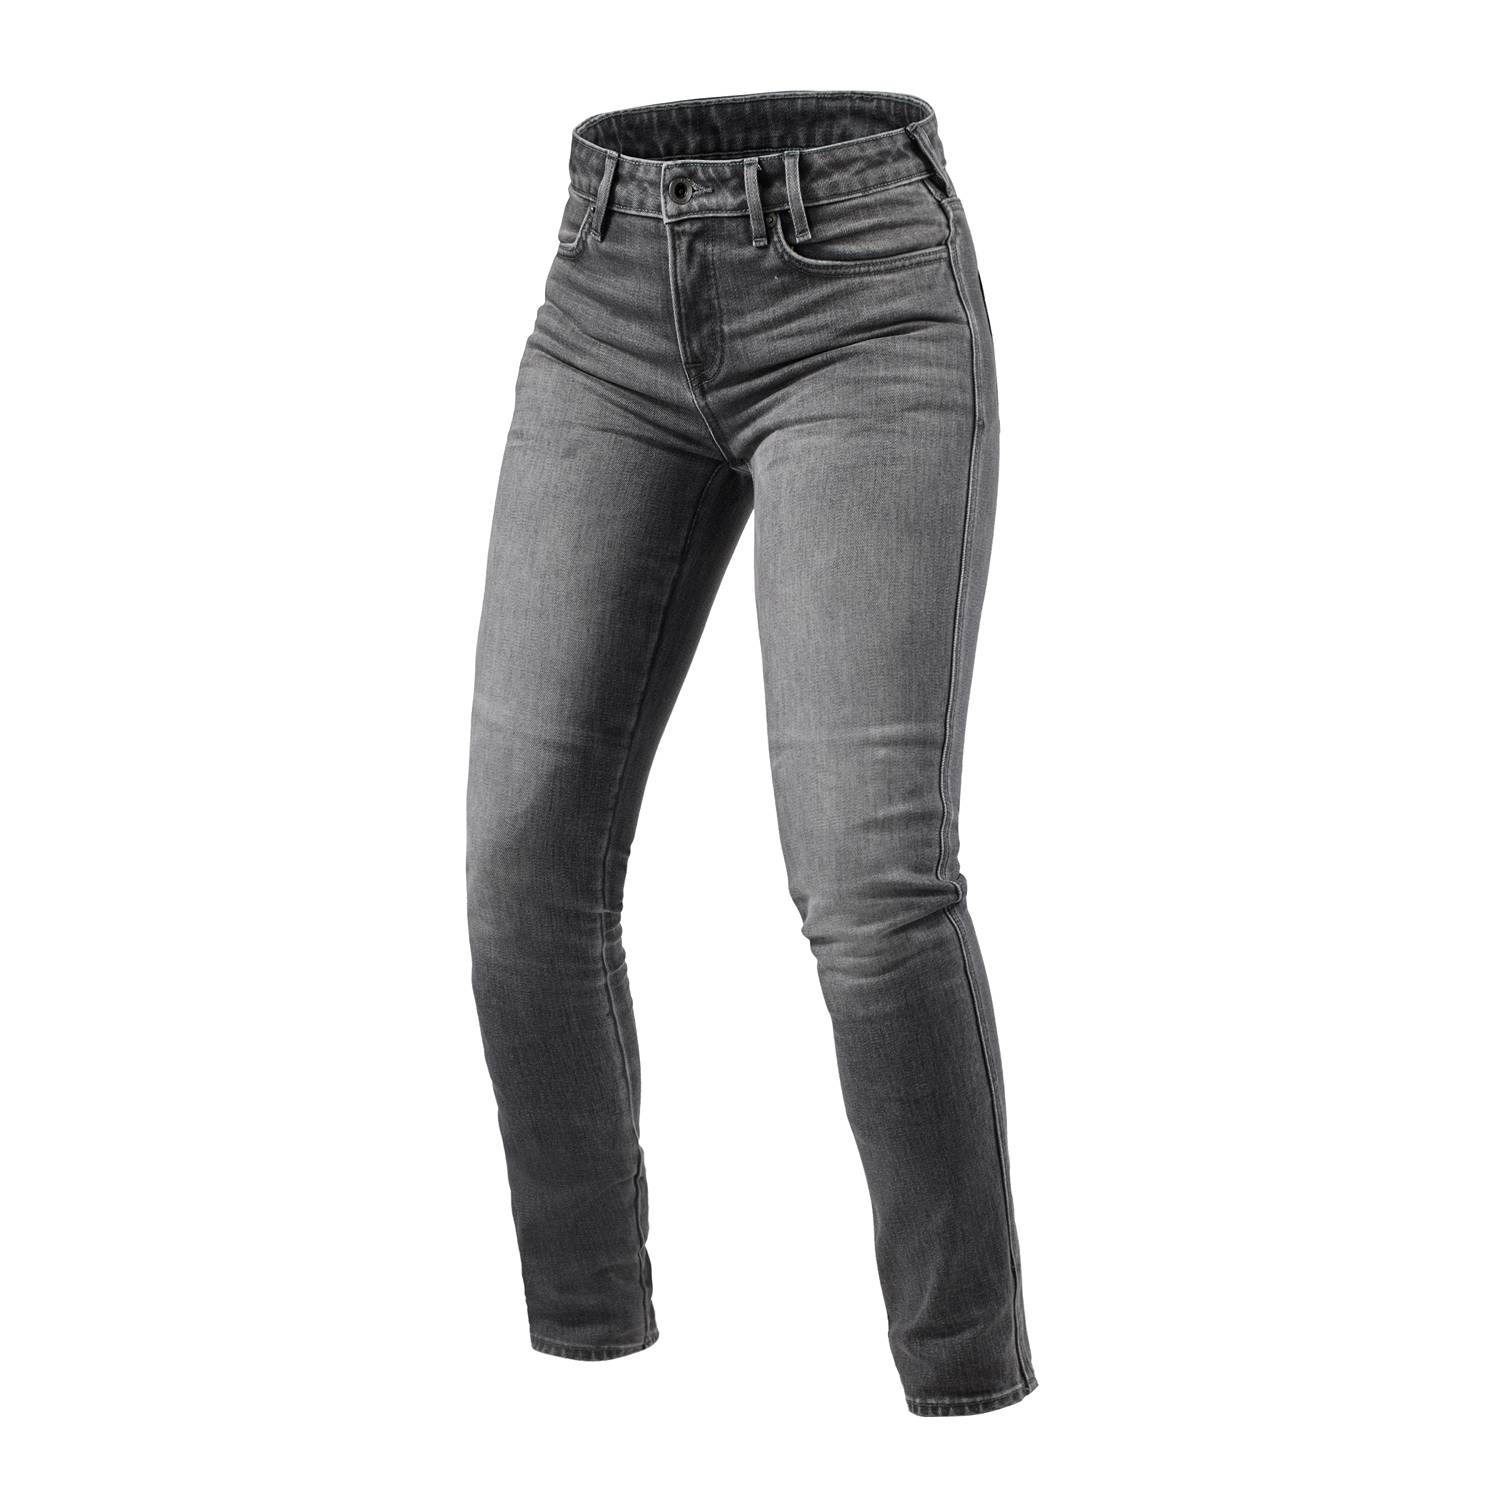 Image of REV'IT! Jeans Shelby 2 Ladies SK Medium Grey Stone L30 Size L30/W31 EN